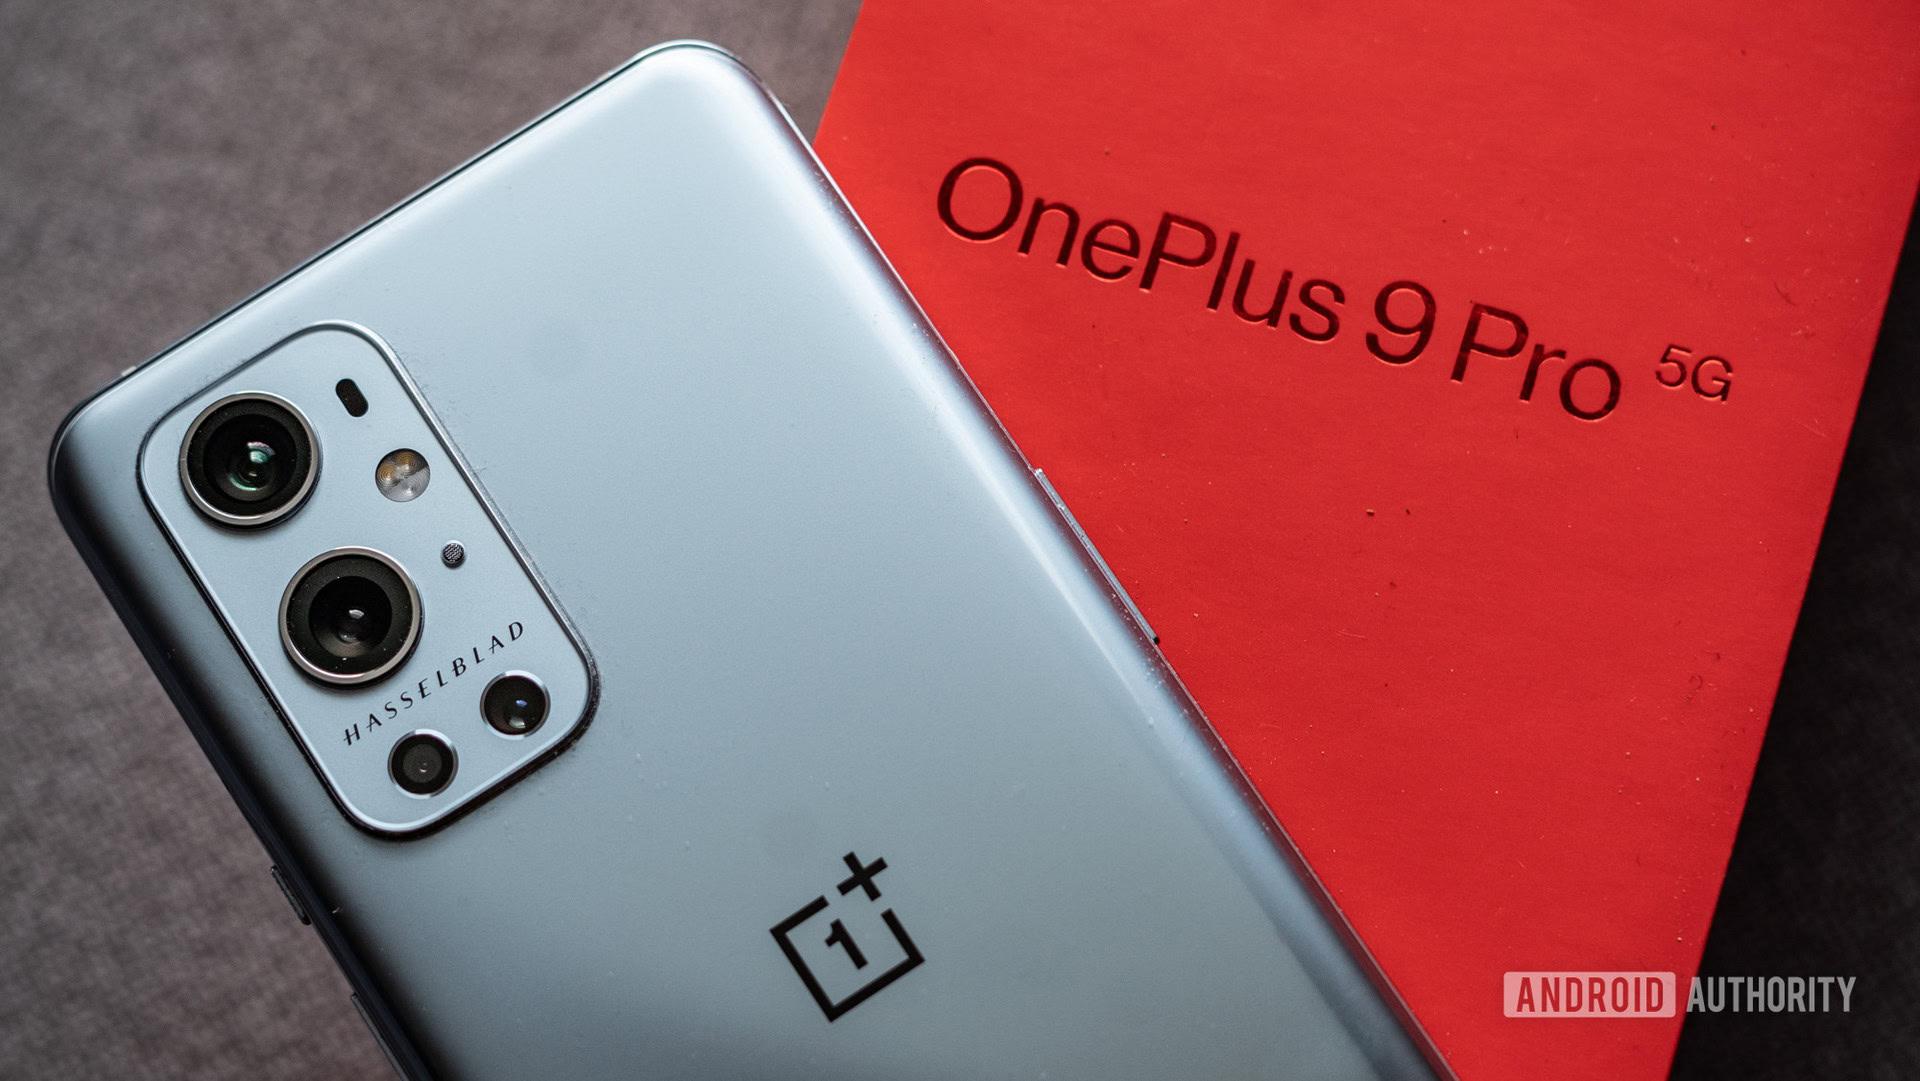 OnePlus 9 Pro hassleblad的特写